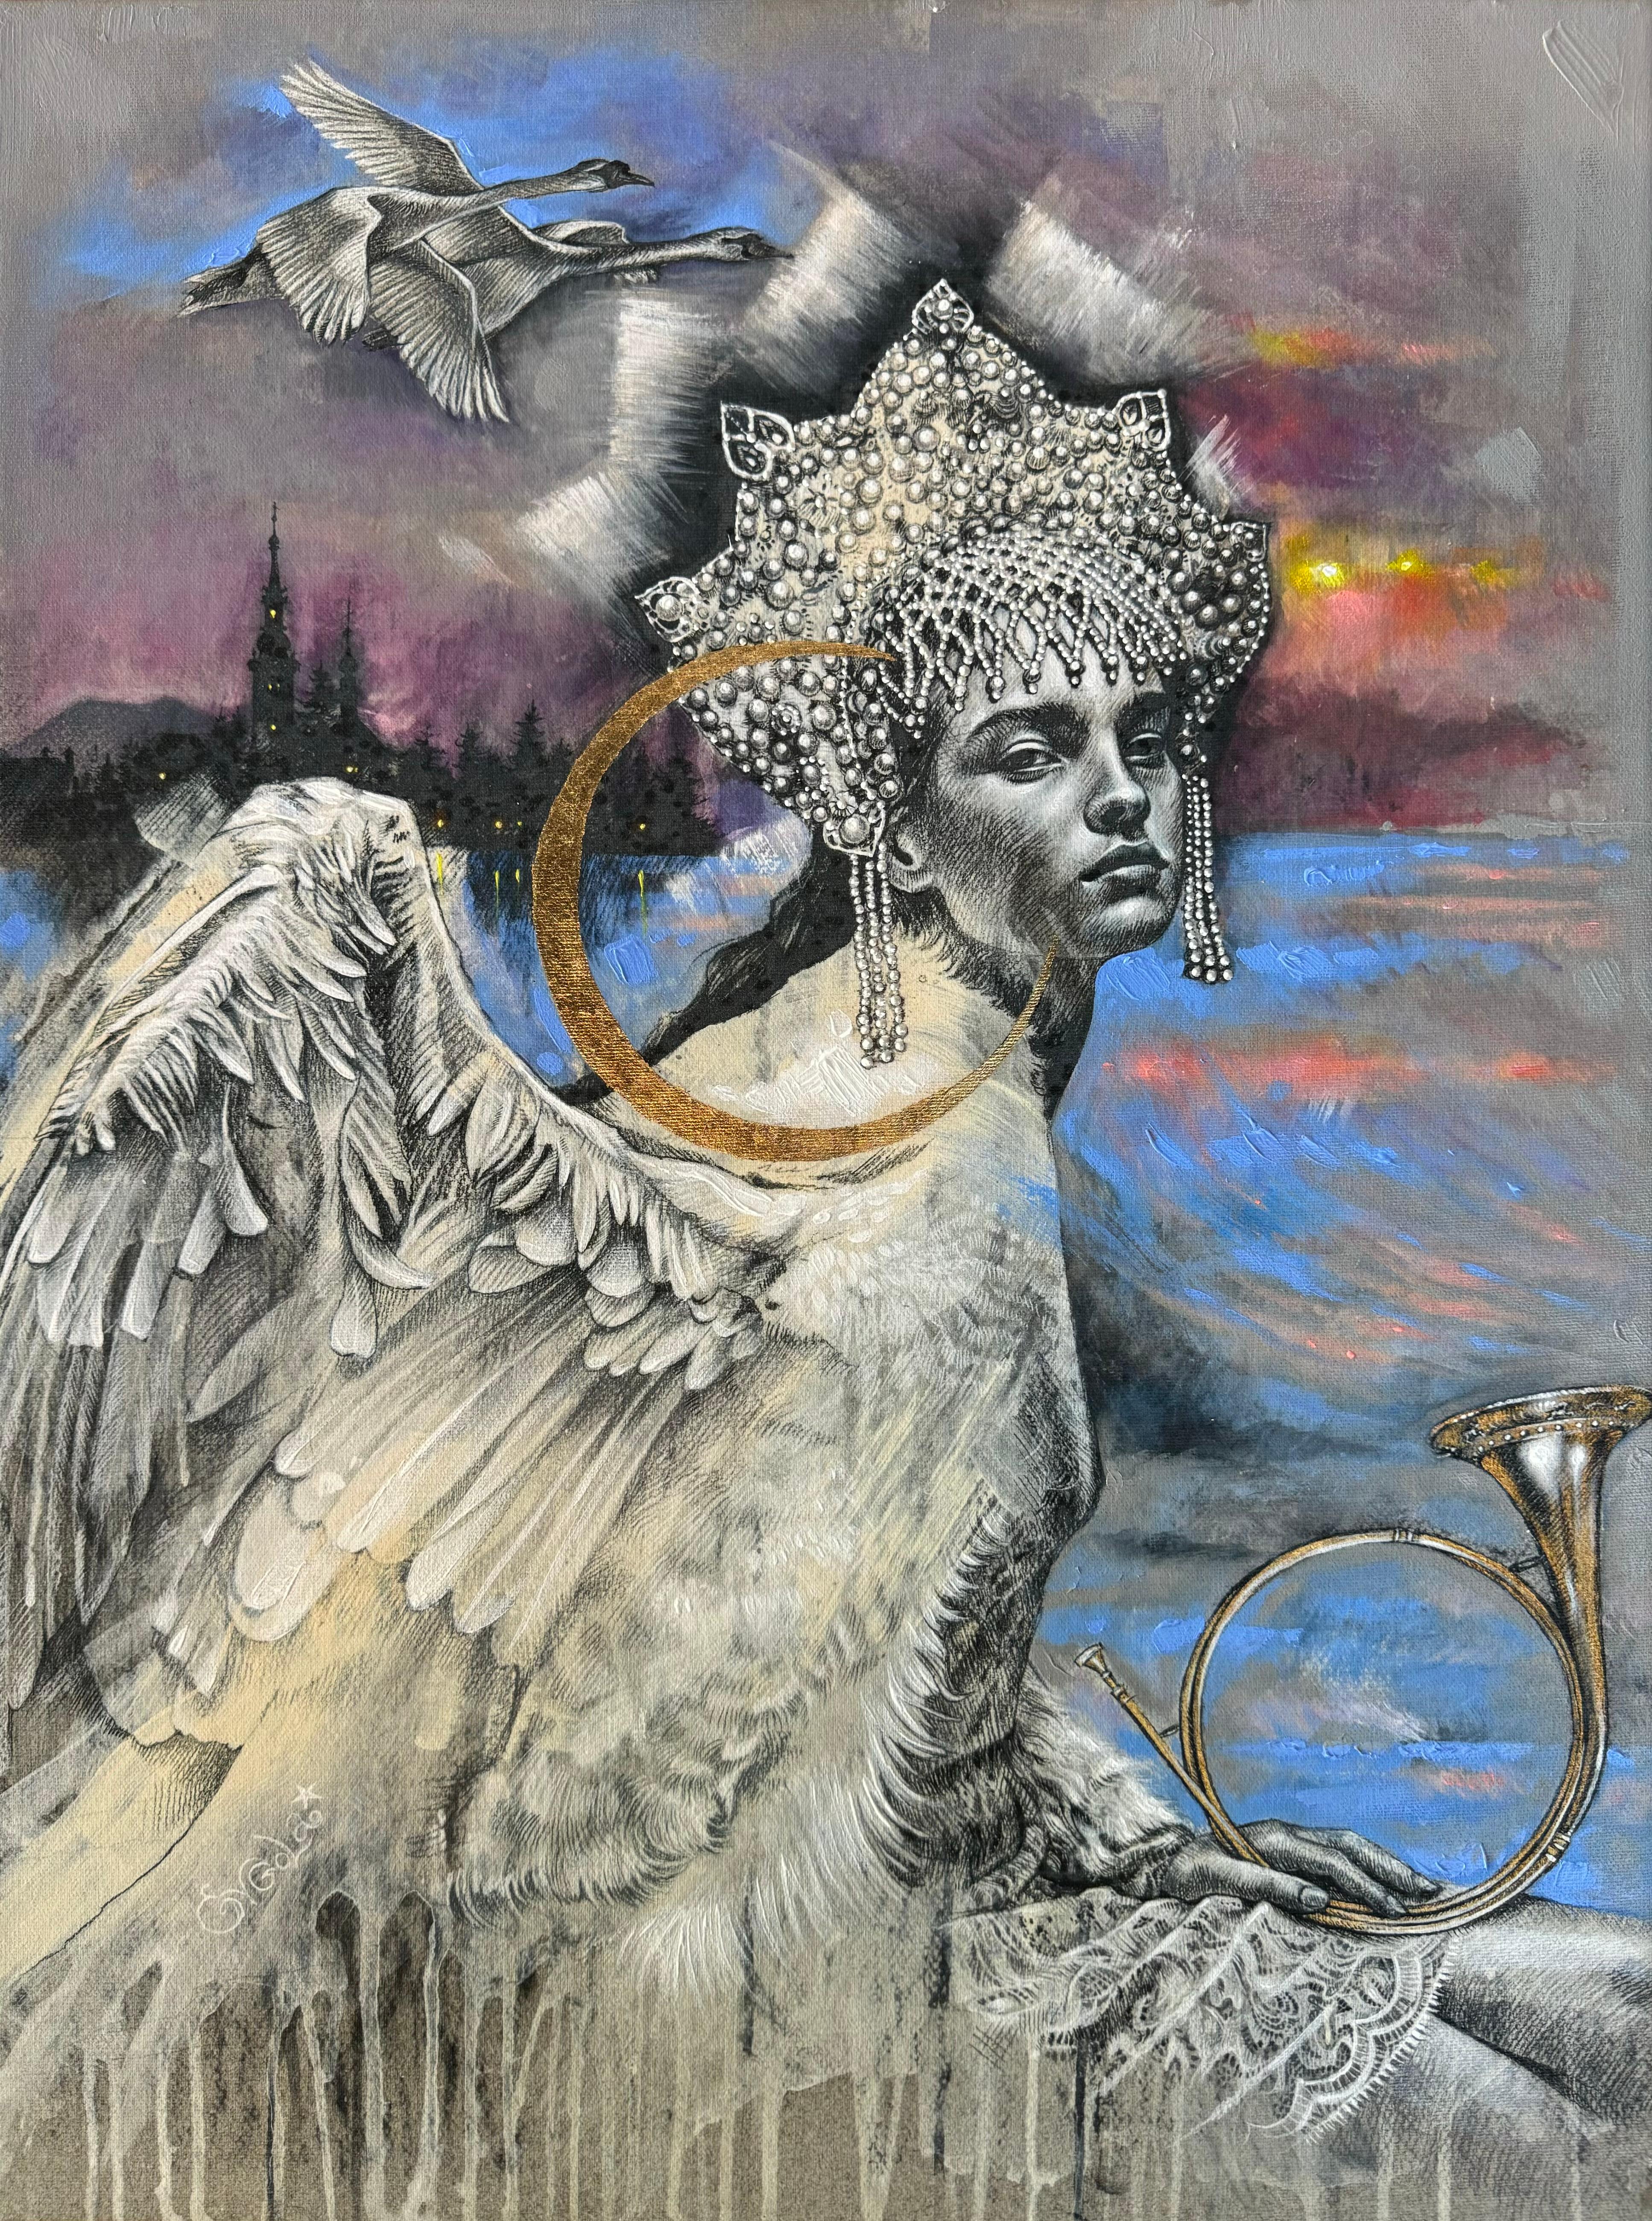 Magic Realism Figurative Artwork, "Swan Song" by Evgeniya Golik